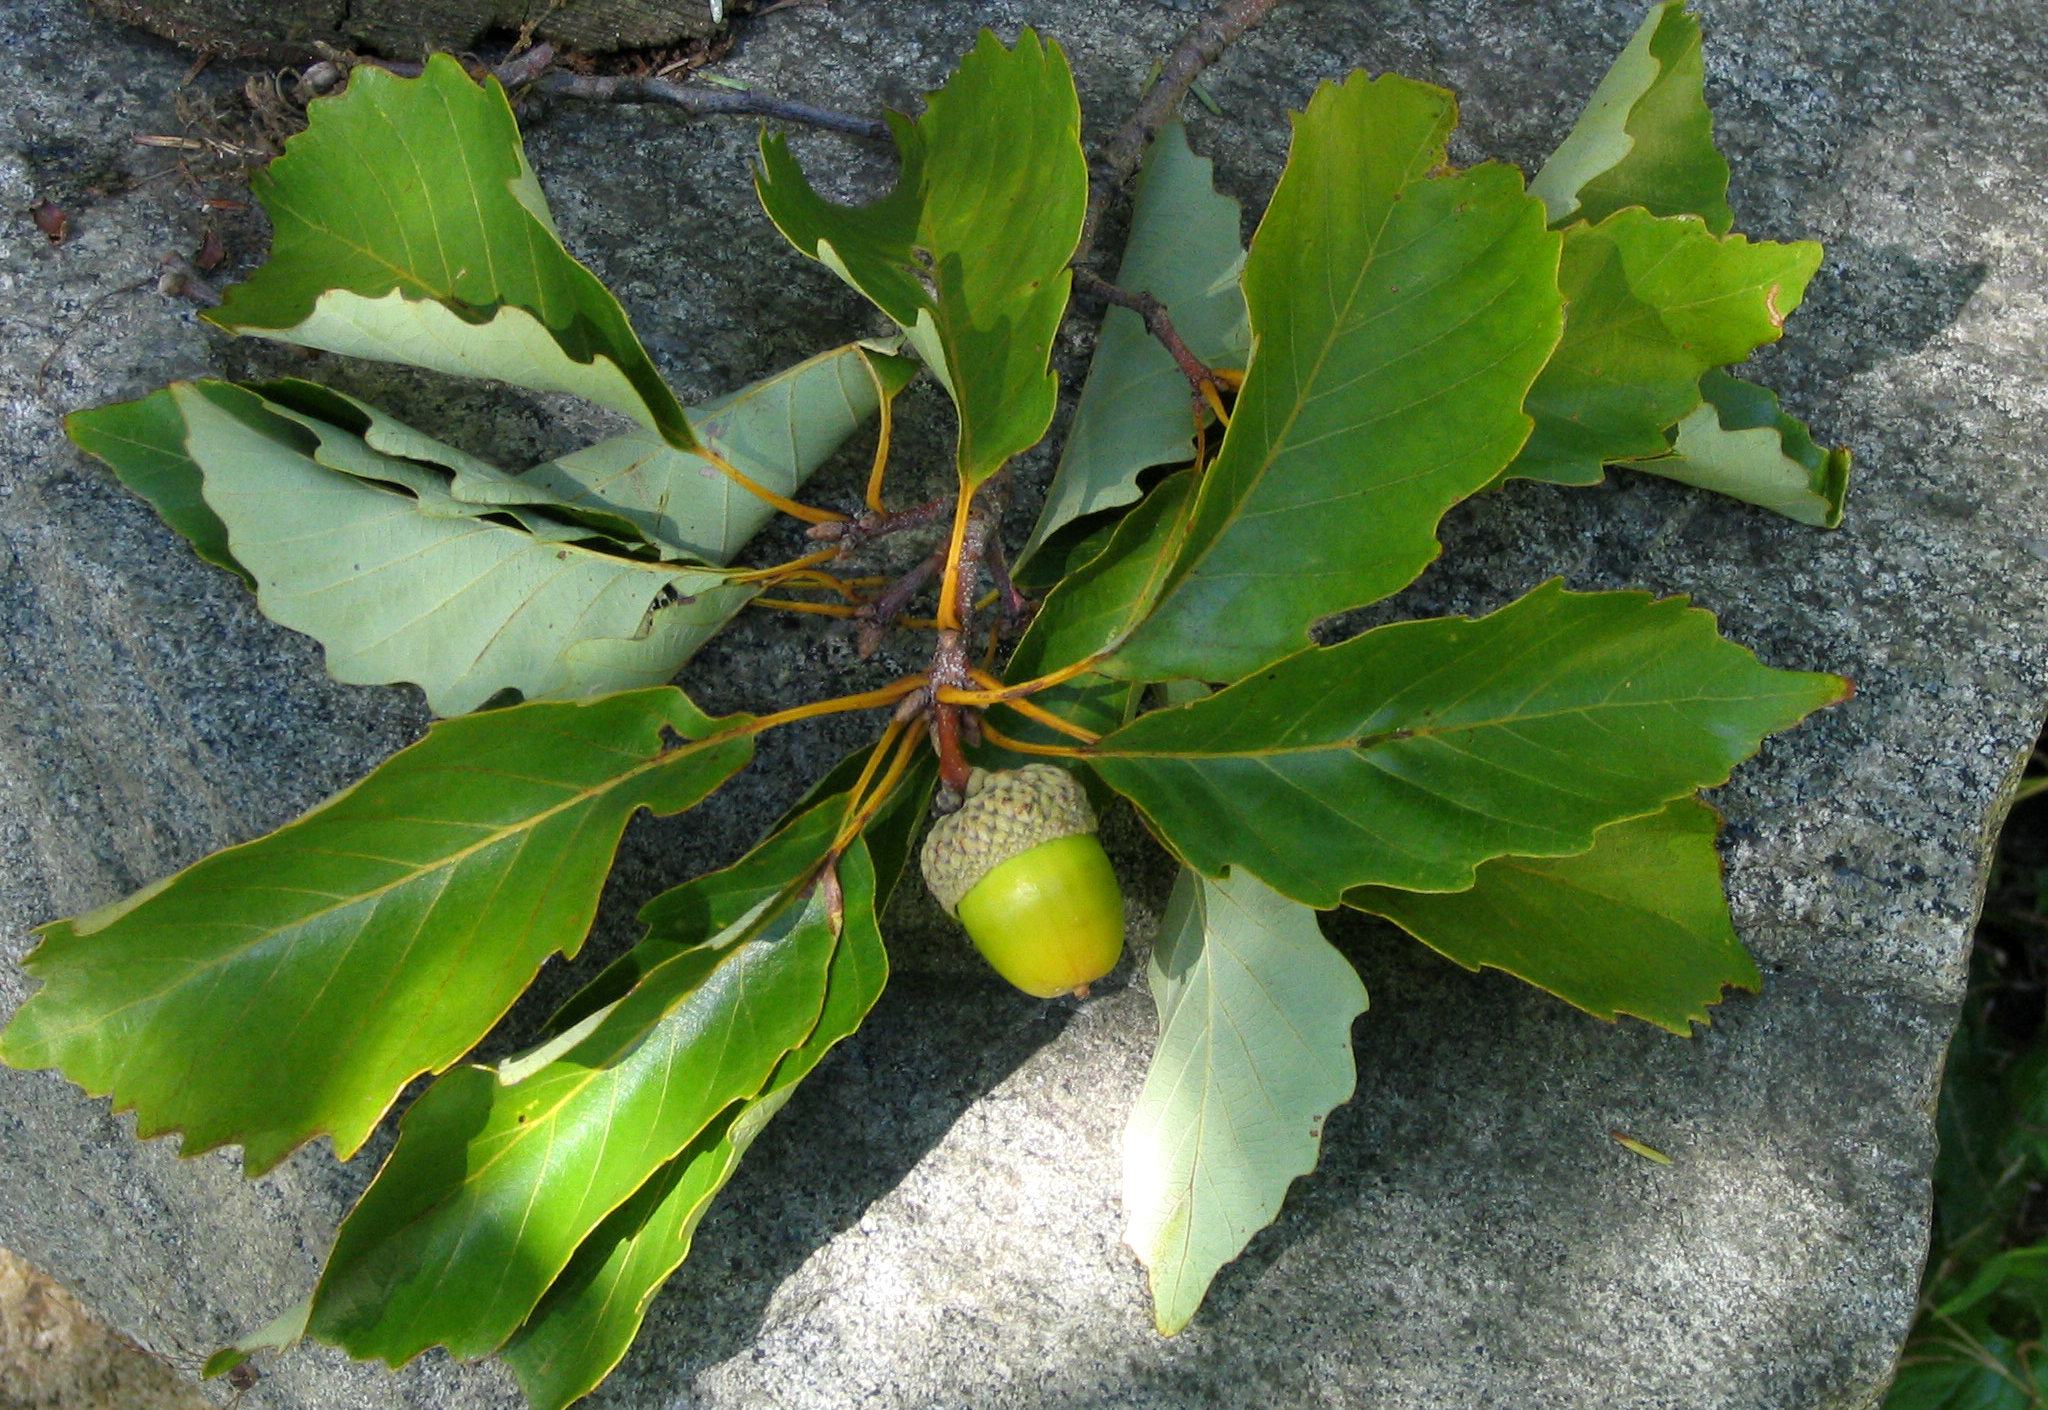 A chestnut oak acorn attached to a bundle of oak leaves on a rock.